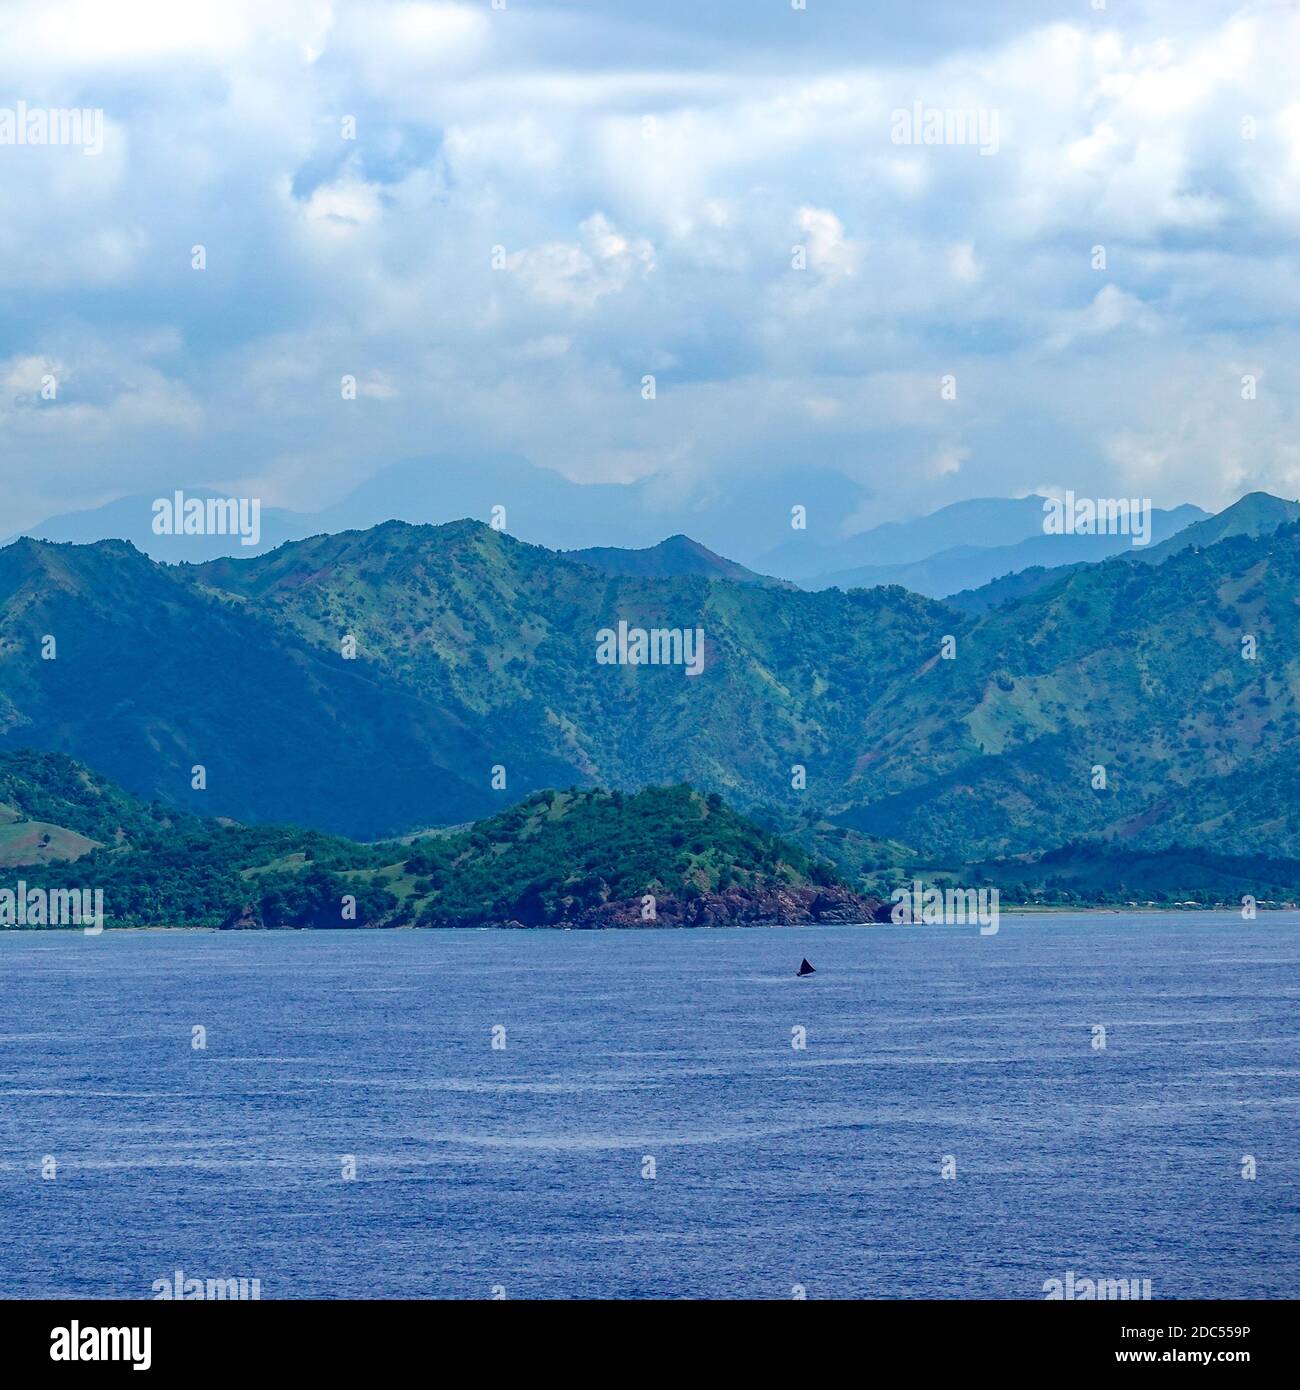 Haiti-11/1/19: The hazy and mountainous coastline of the Caribbean Island of Haiti as a cruise ship sails by. Stock Photo